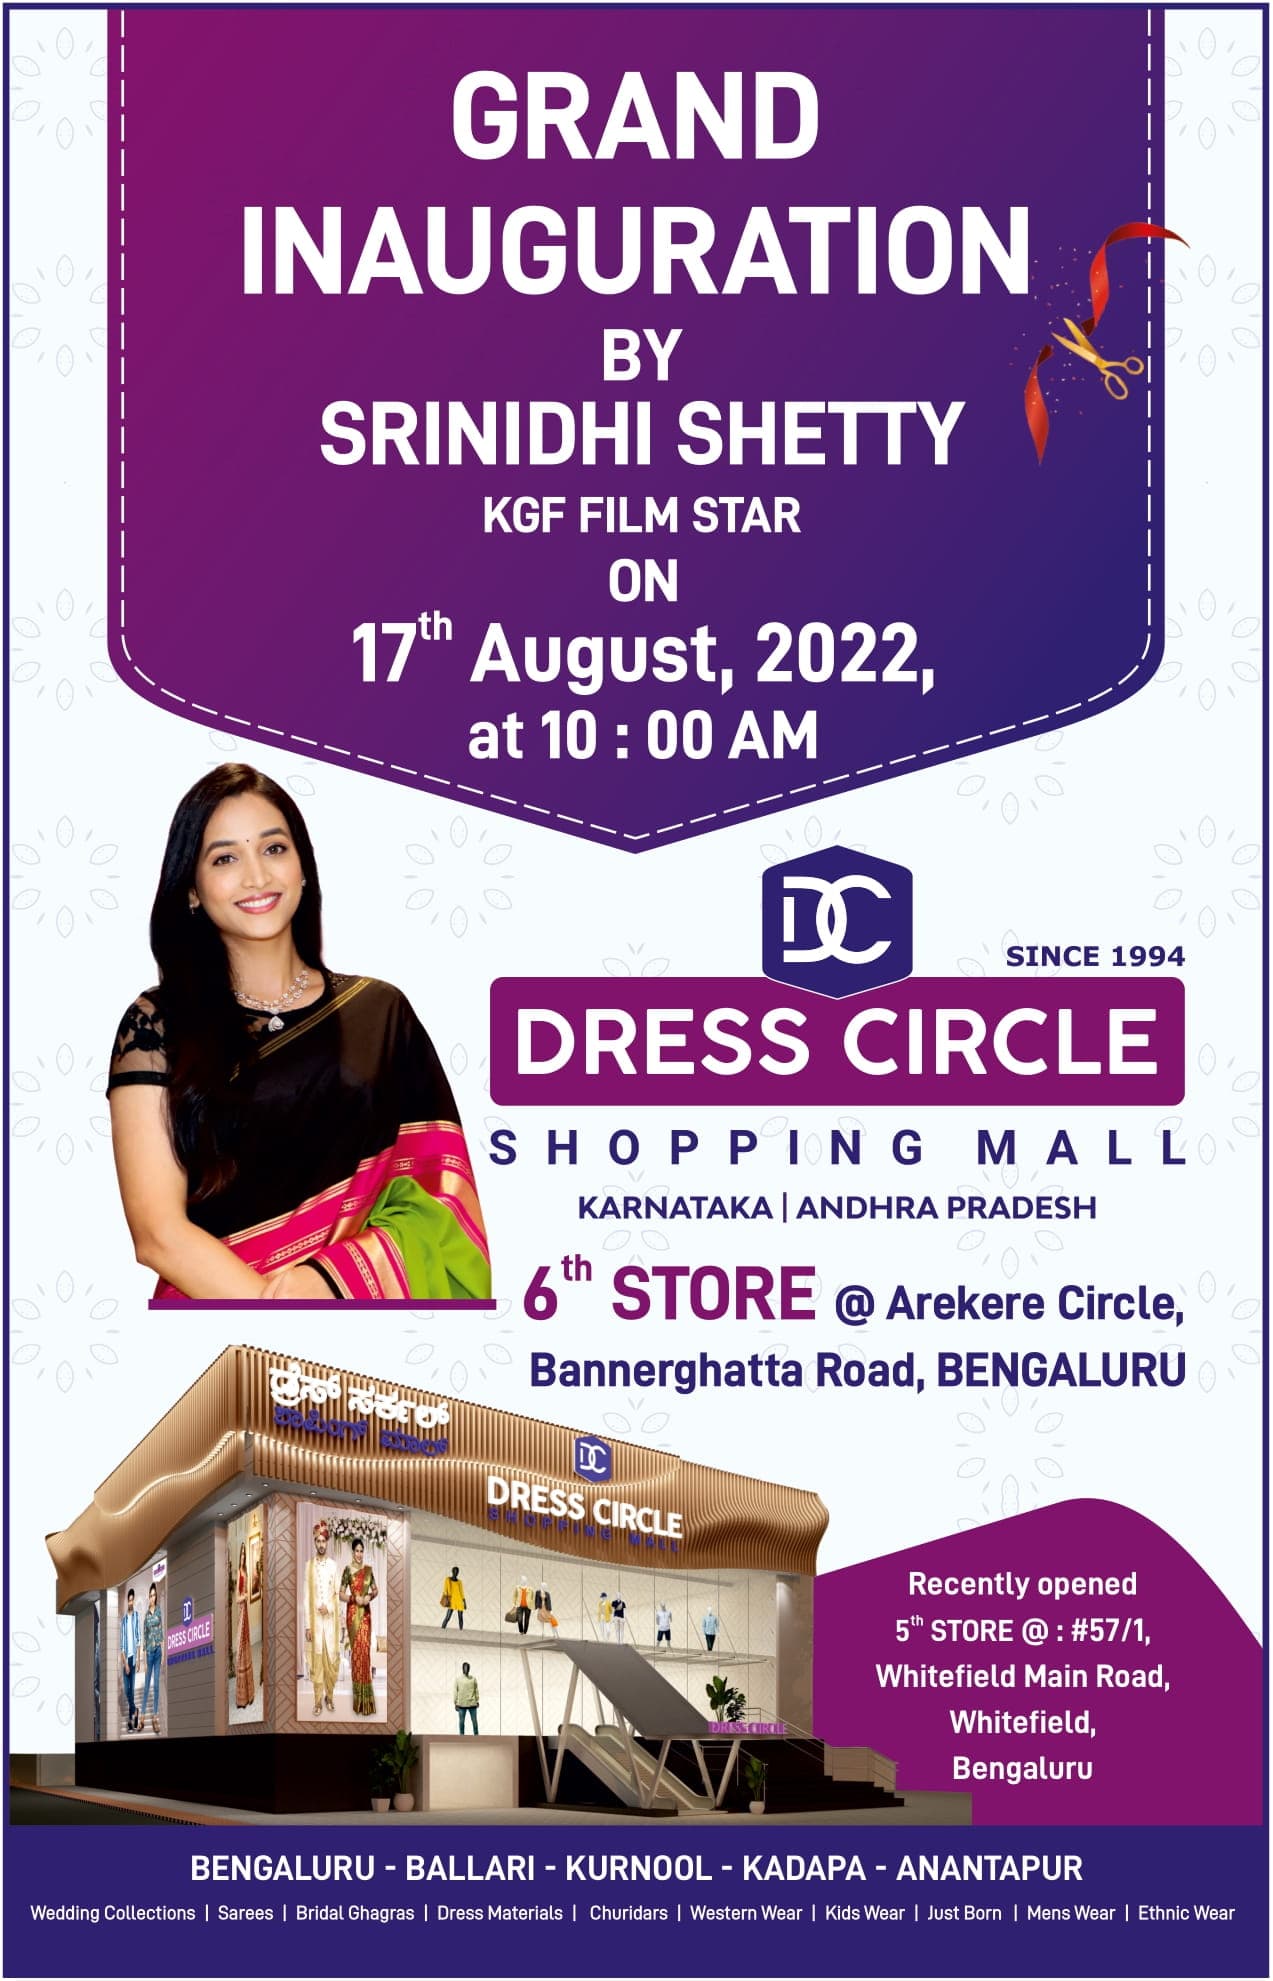 Dress Circle | Srinidhi Shetty | Grand Inauguration